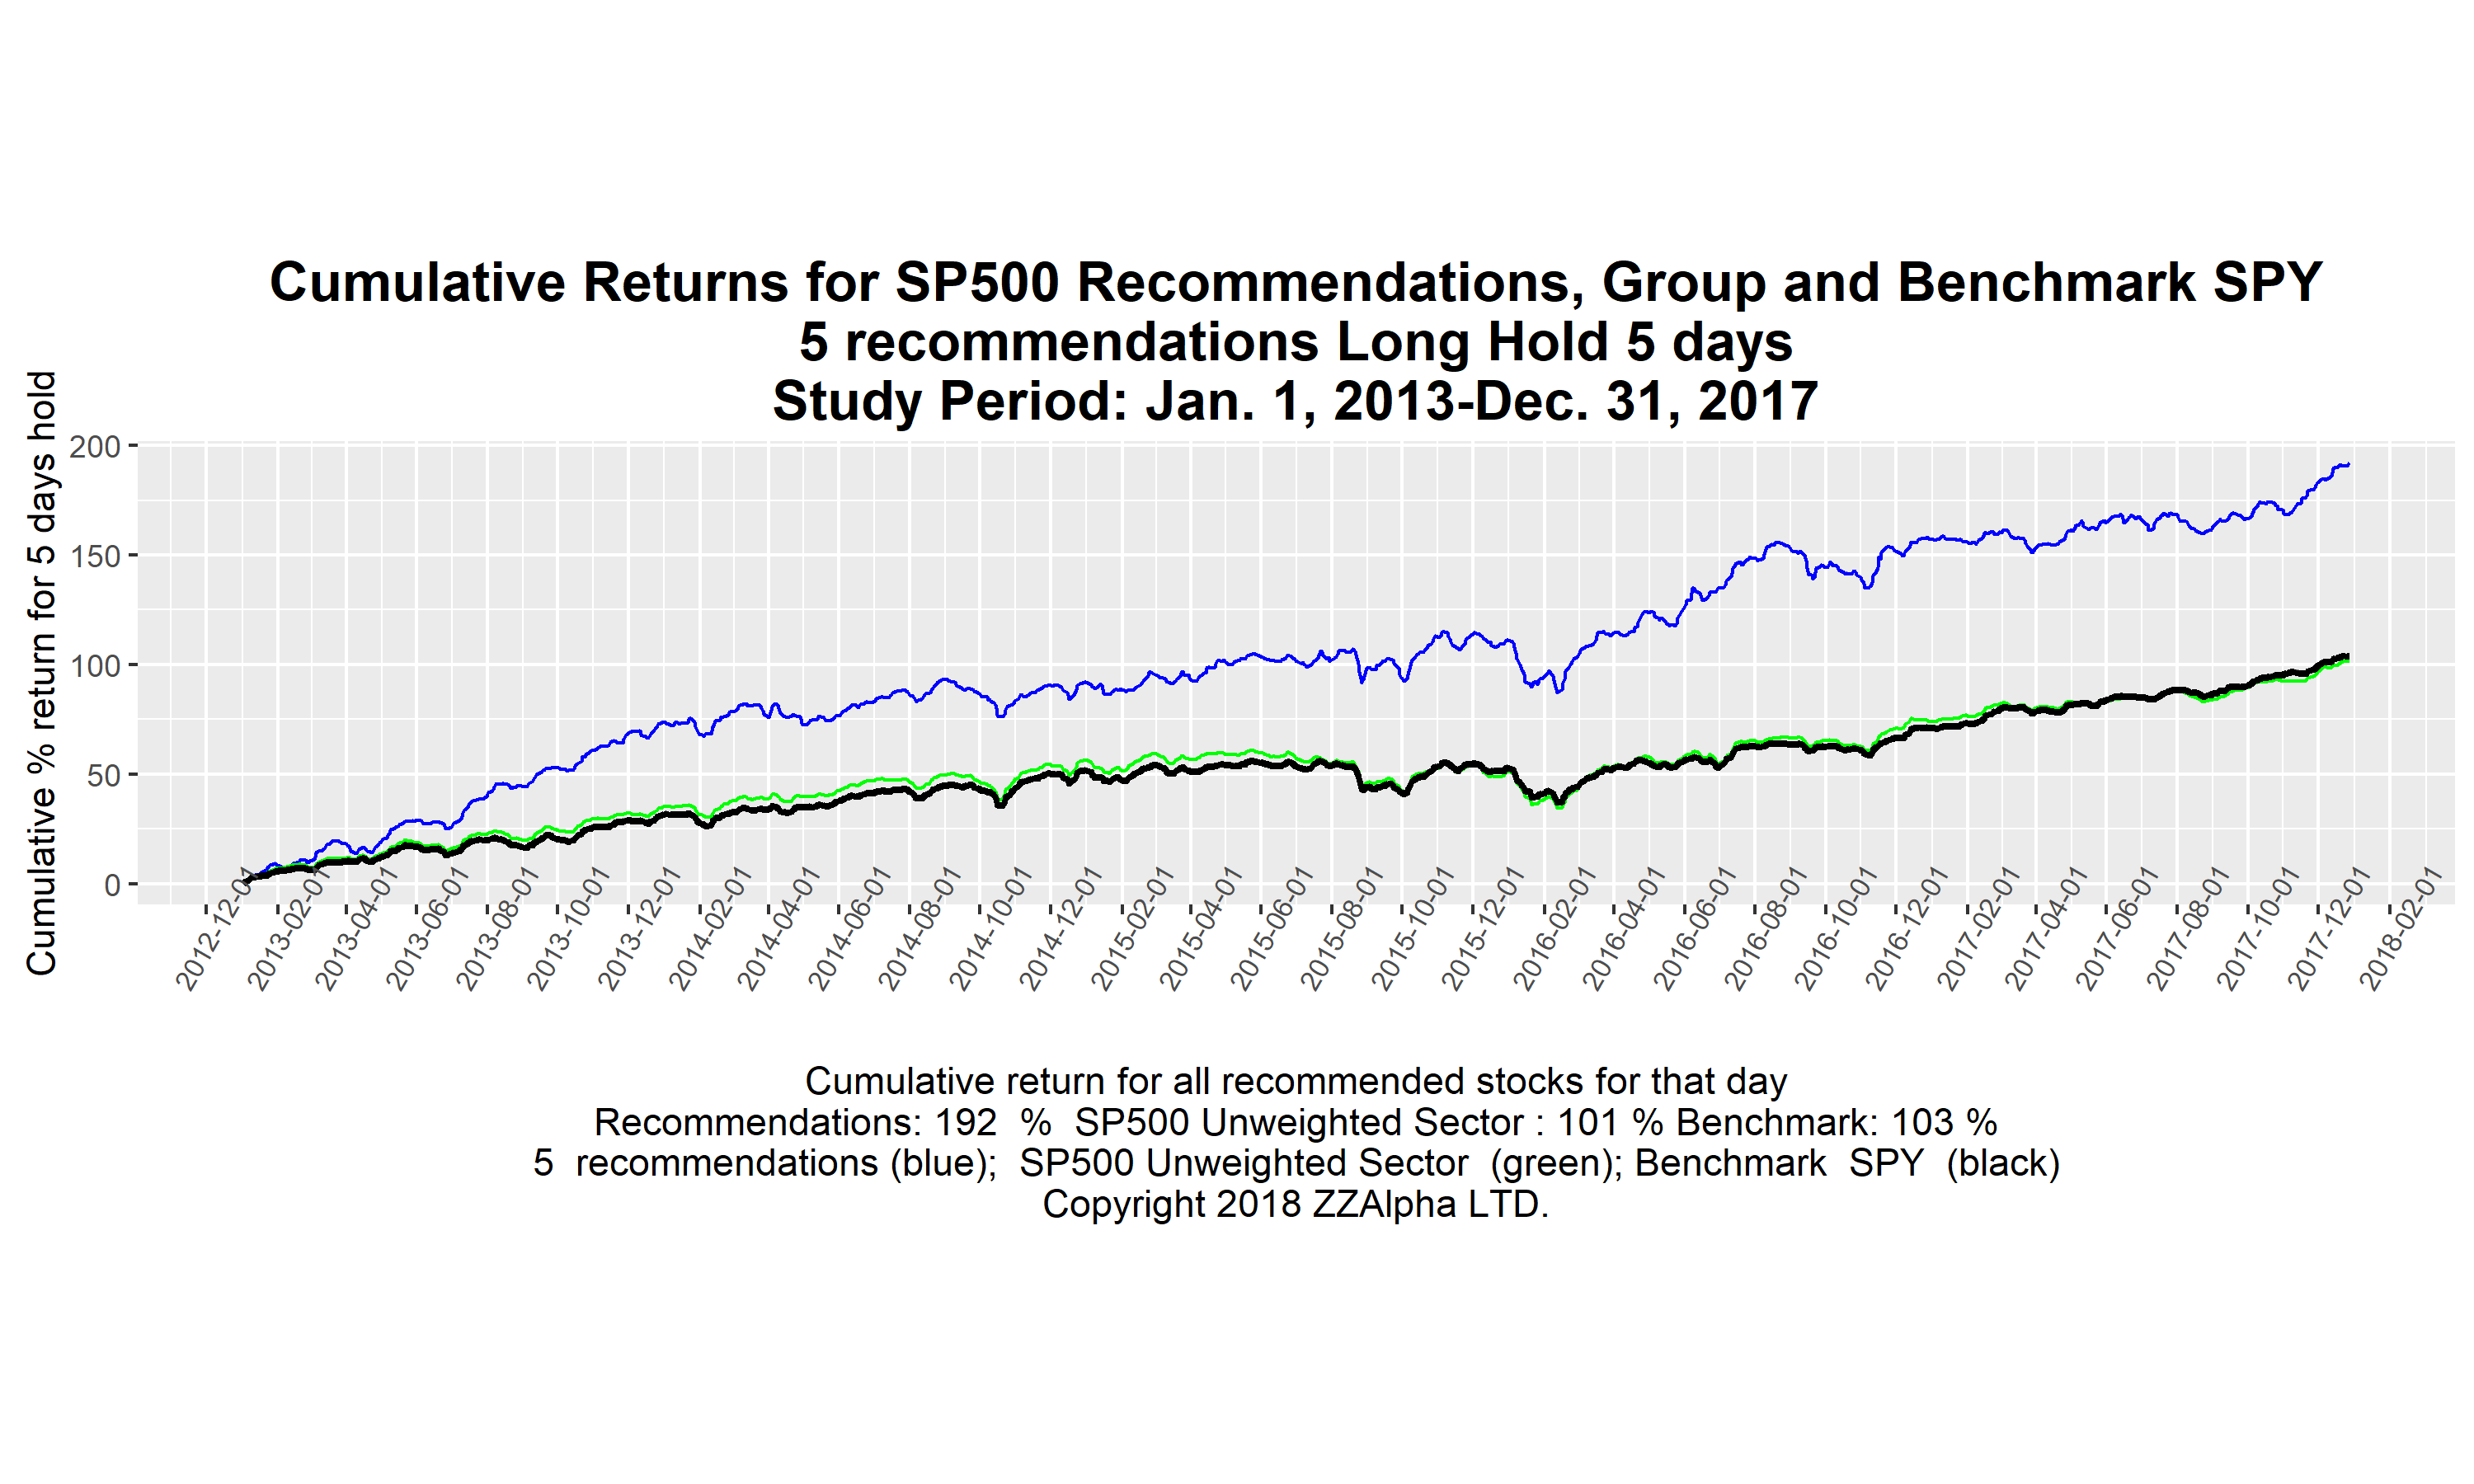 Recommendations from SP500 cumulative return